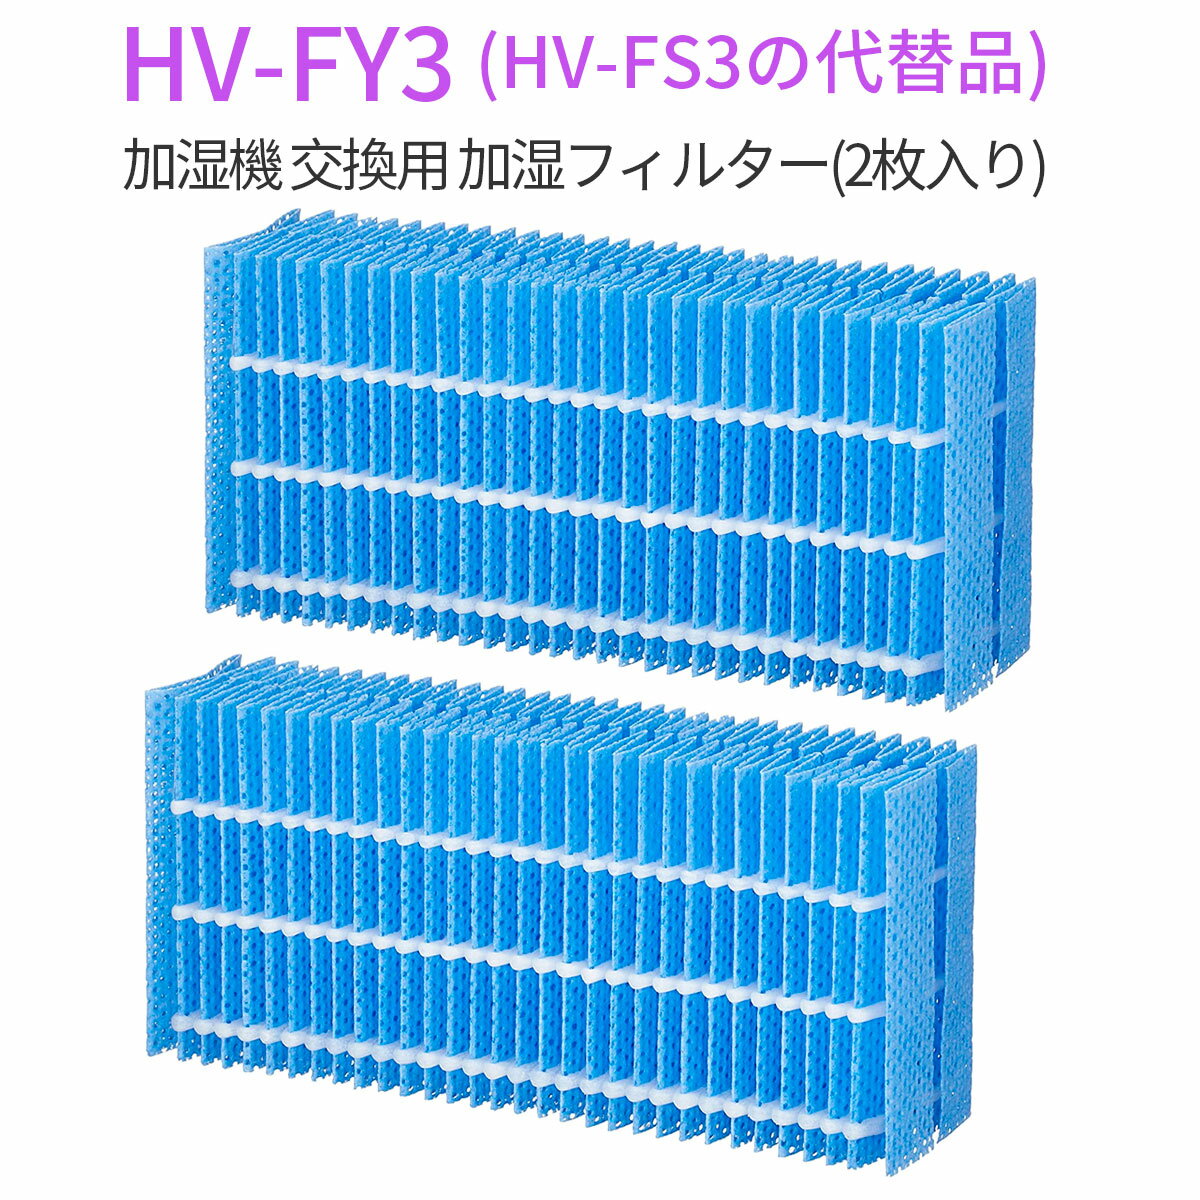 hv-fy3 加湿フィルター HV-FY3 加湿器 フィルター HV-FS3の代替品 シャープ 気化式加湿機用 交換フィルター (互換品/2枚入り) 1